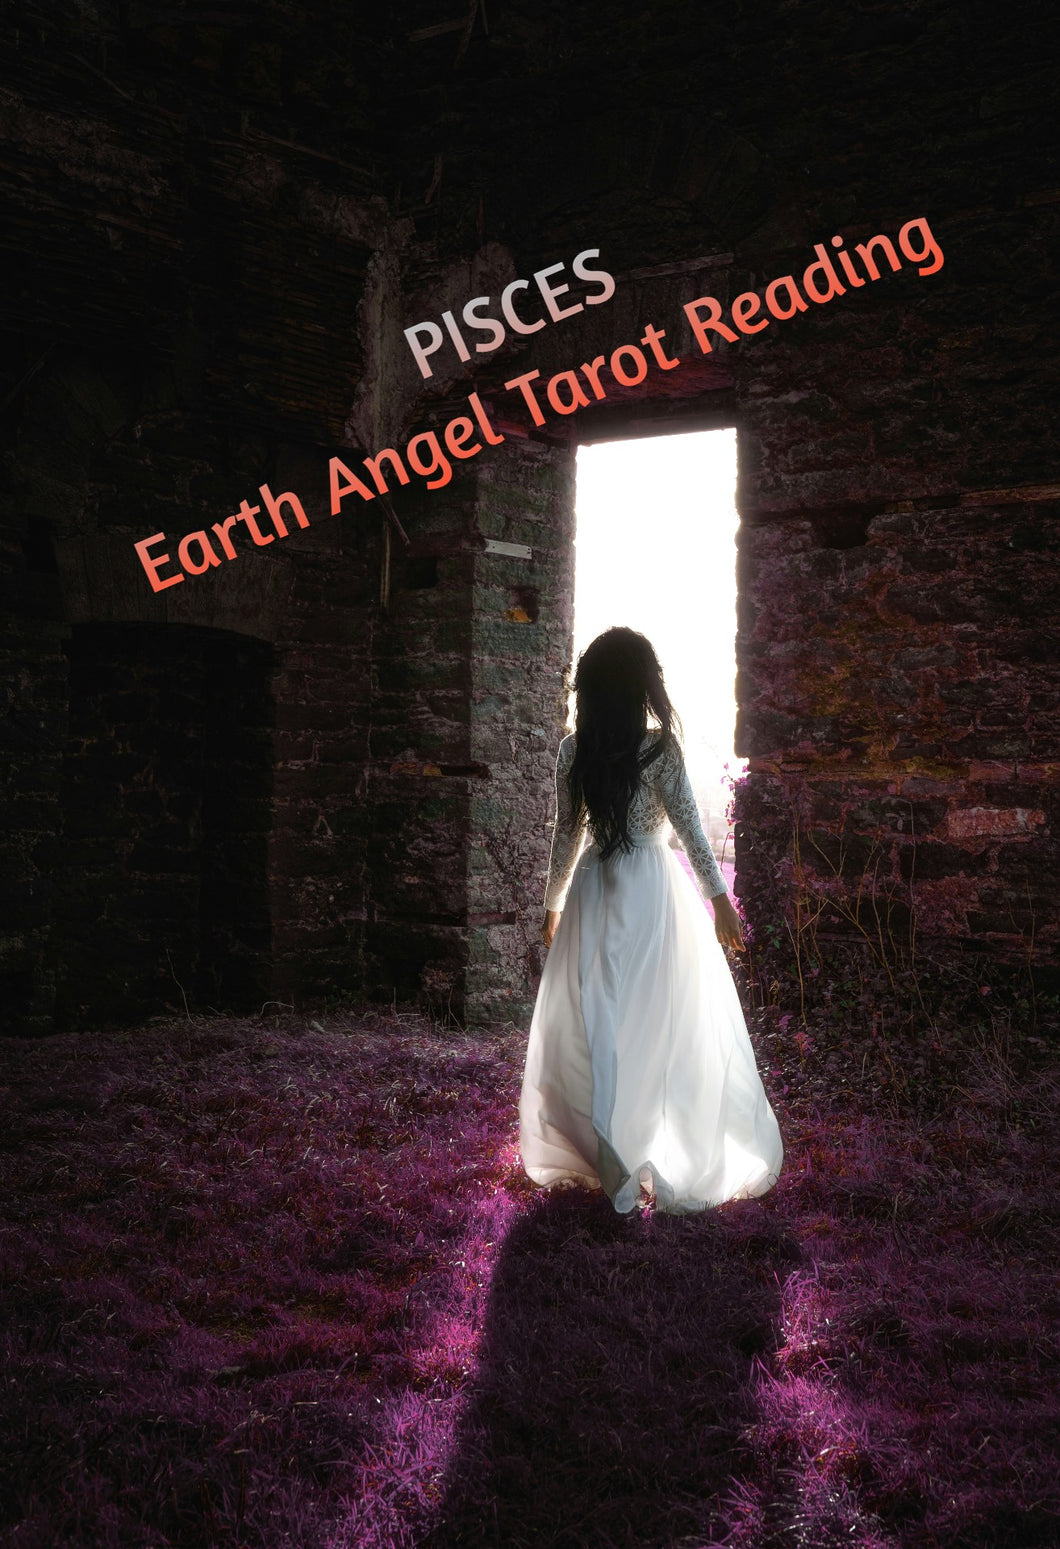 Pisces Earth Angel Tarot Reading